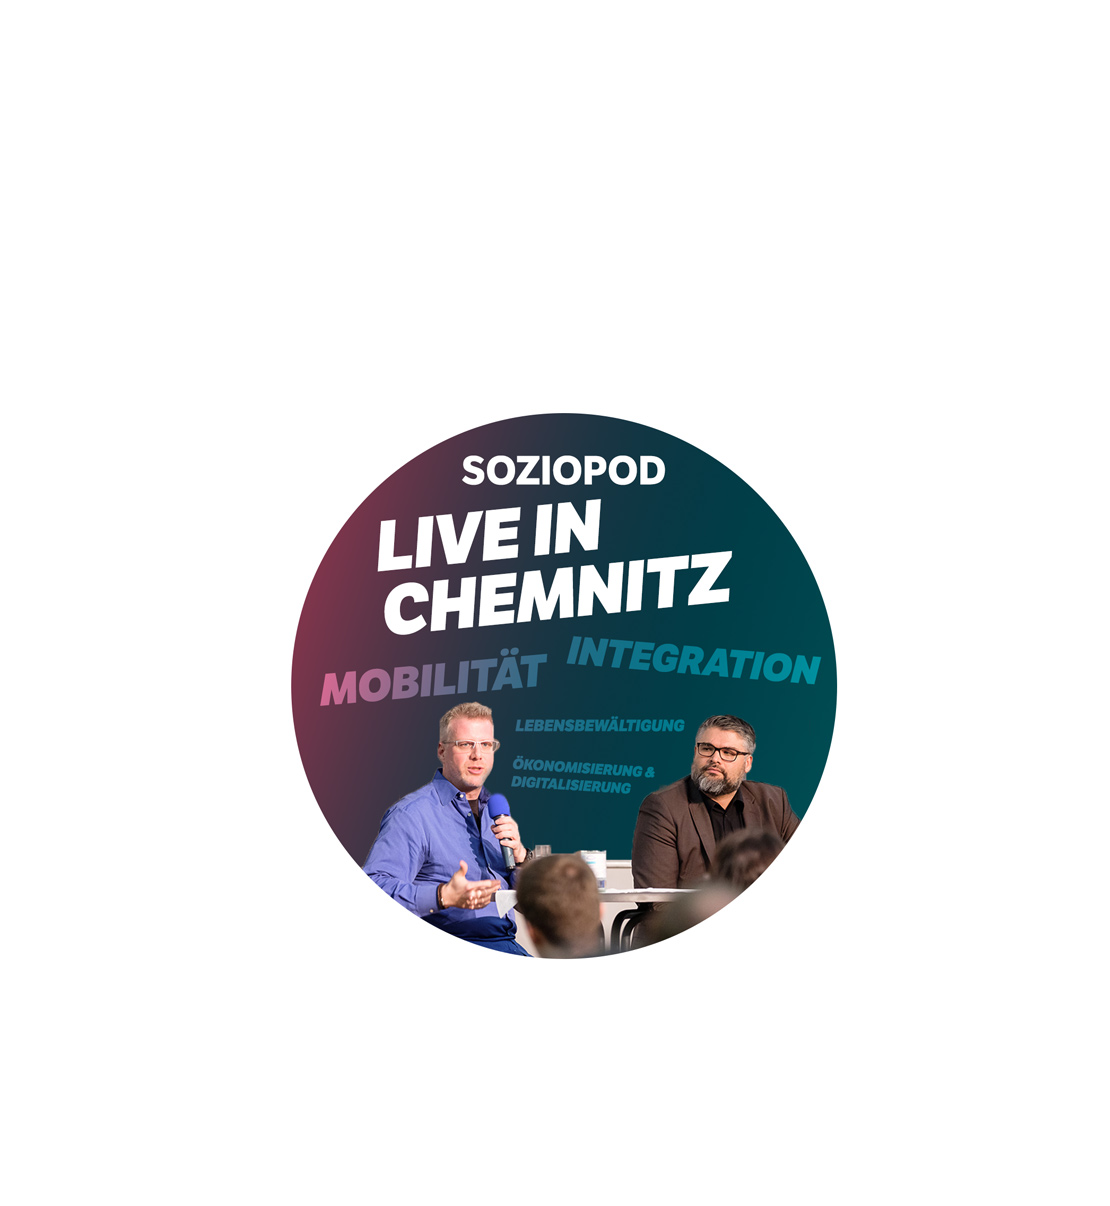 Soziopod Live & Analog #014: “Mobilität & Integration” in Chemnitz